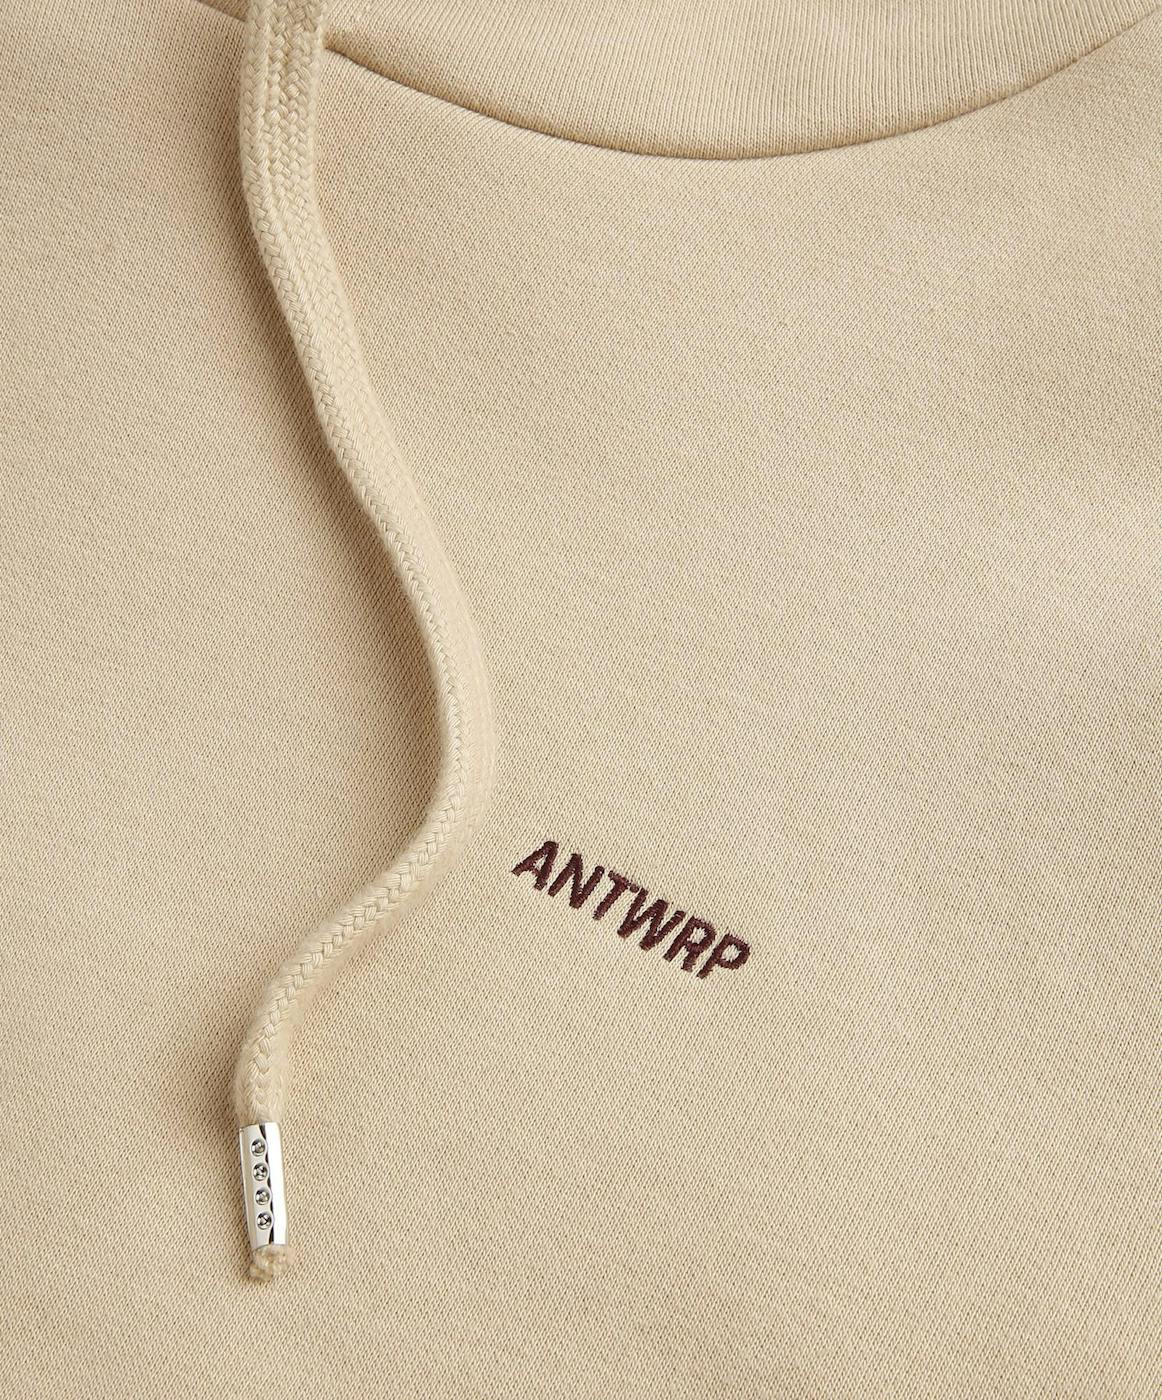 Antwrp - Beige Basic hoodie